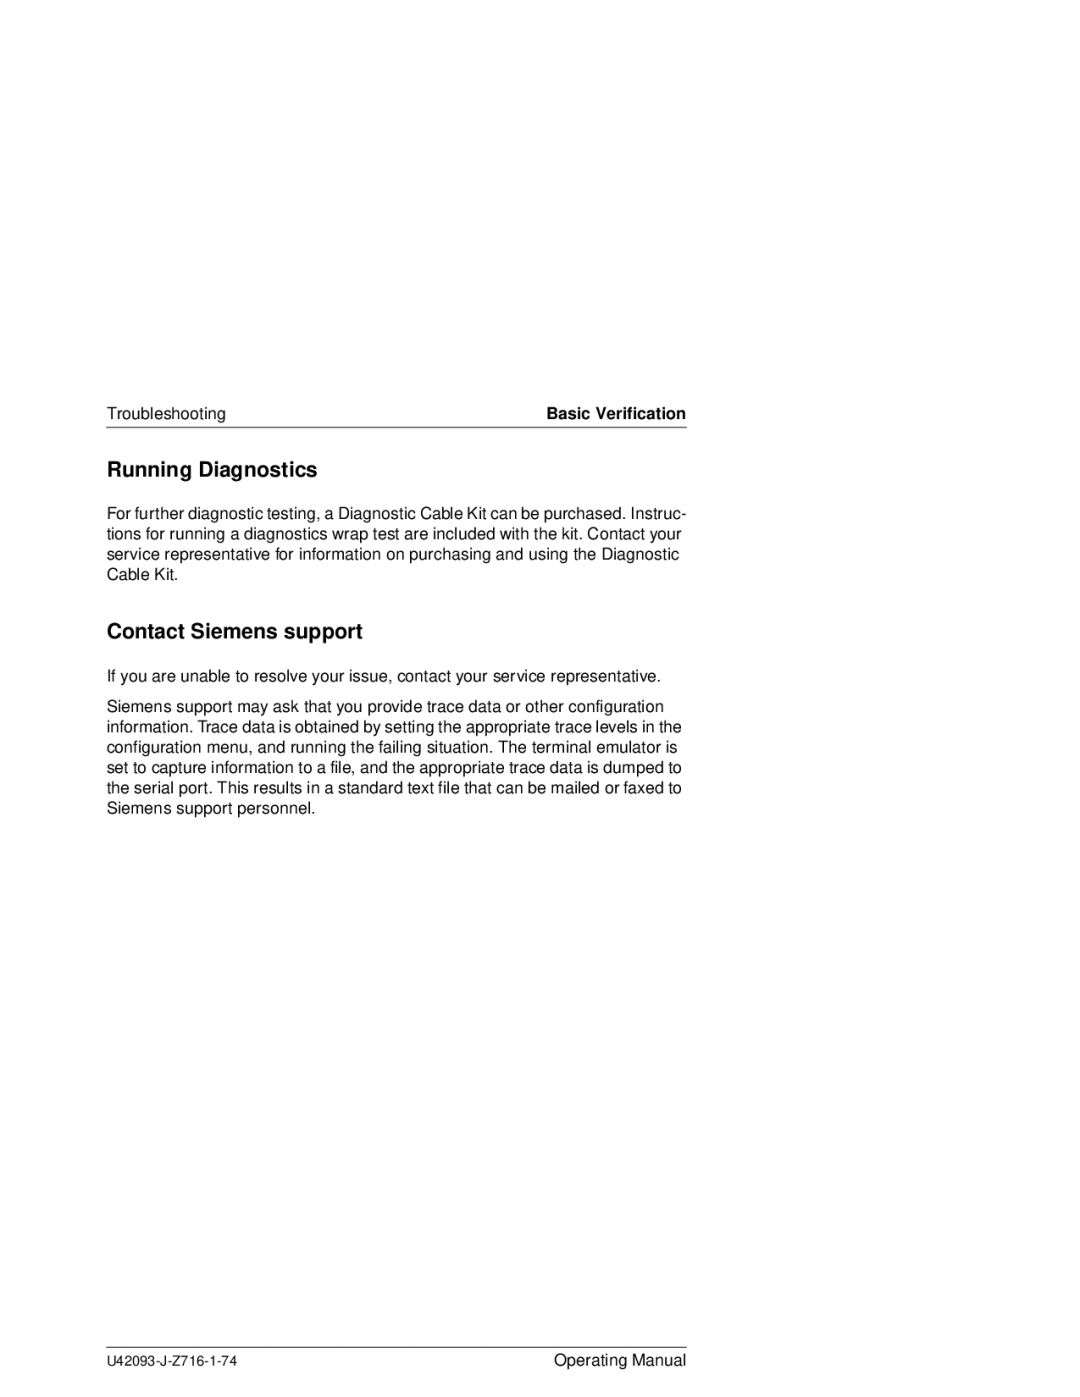 Siemens PSFR-CP41 manual Running Diagnostics, Contact Siemens support 